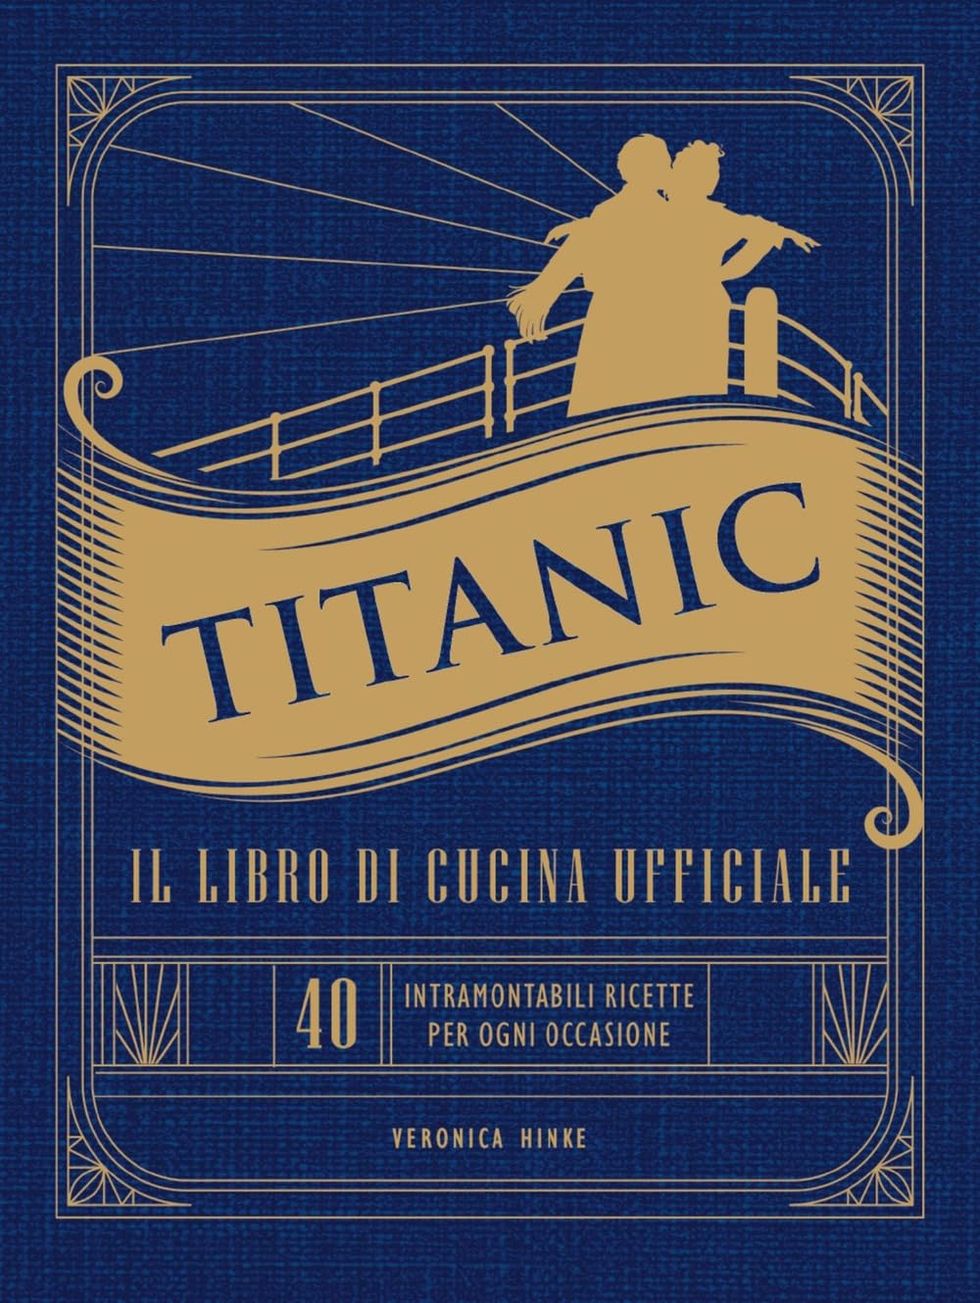 Titanic.  Official cookbook